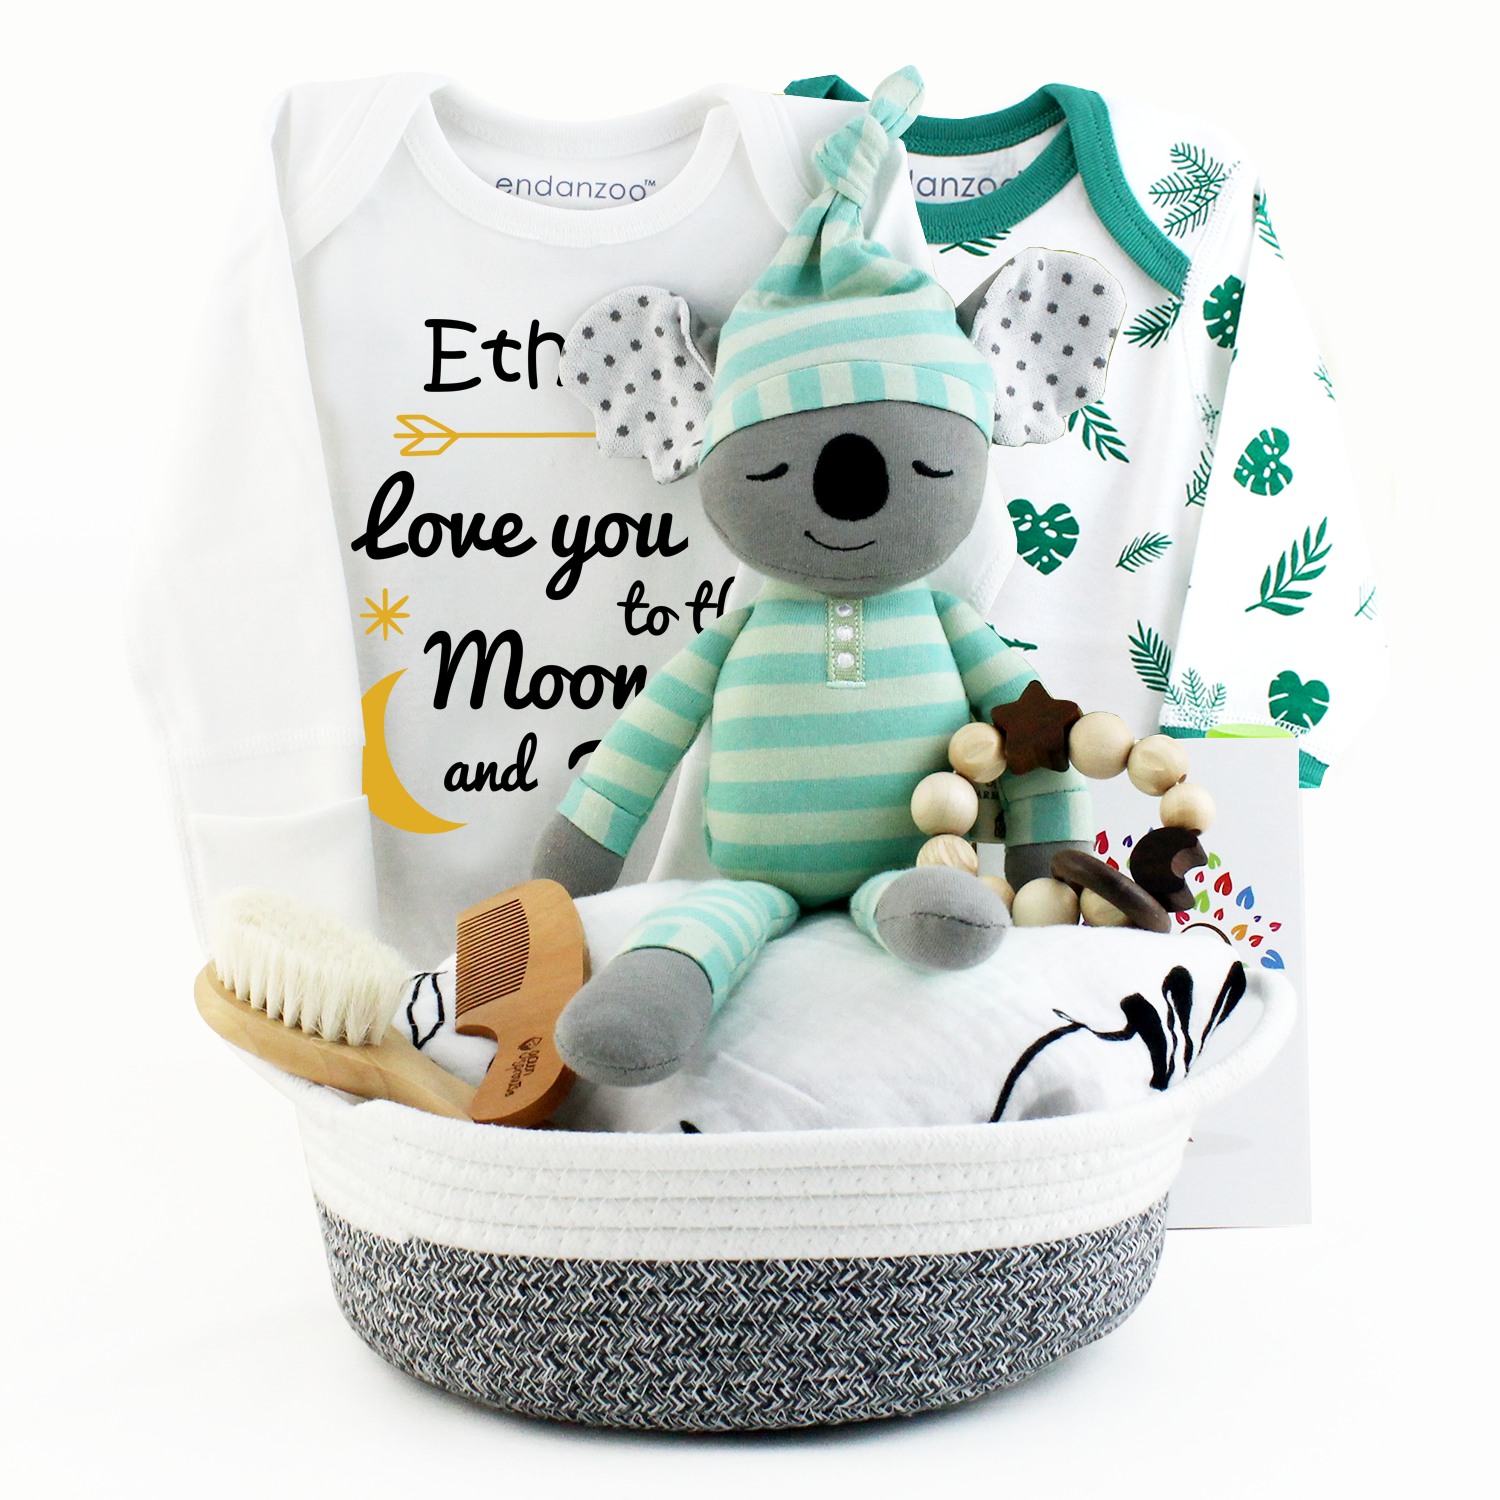 Zeronto Newborn Girl Clothing Gift Box - Little Unicorn – Baby Joy Canada